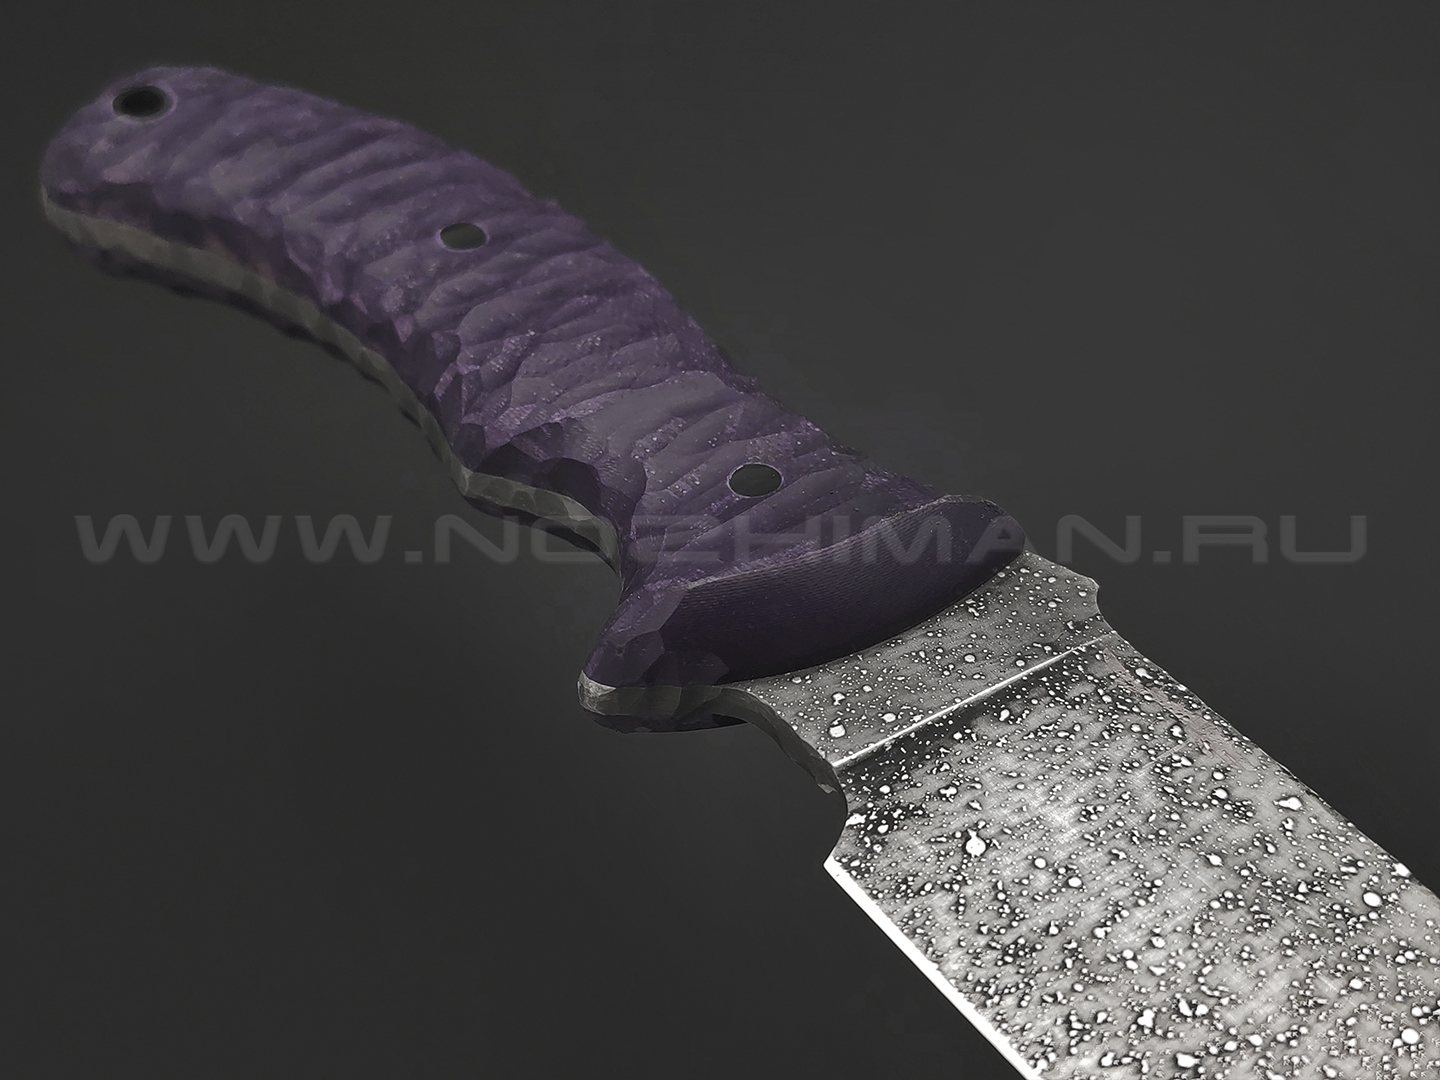 Волчий Век нож Команданте Custom сталь N690 WA, рукоять G10 purple, карбоновые пины